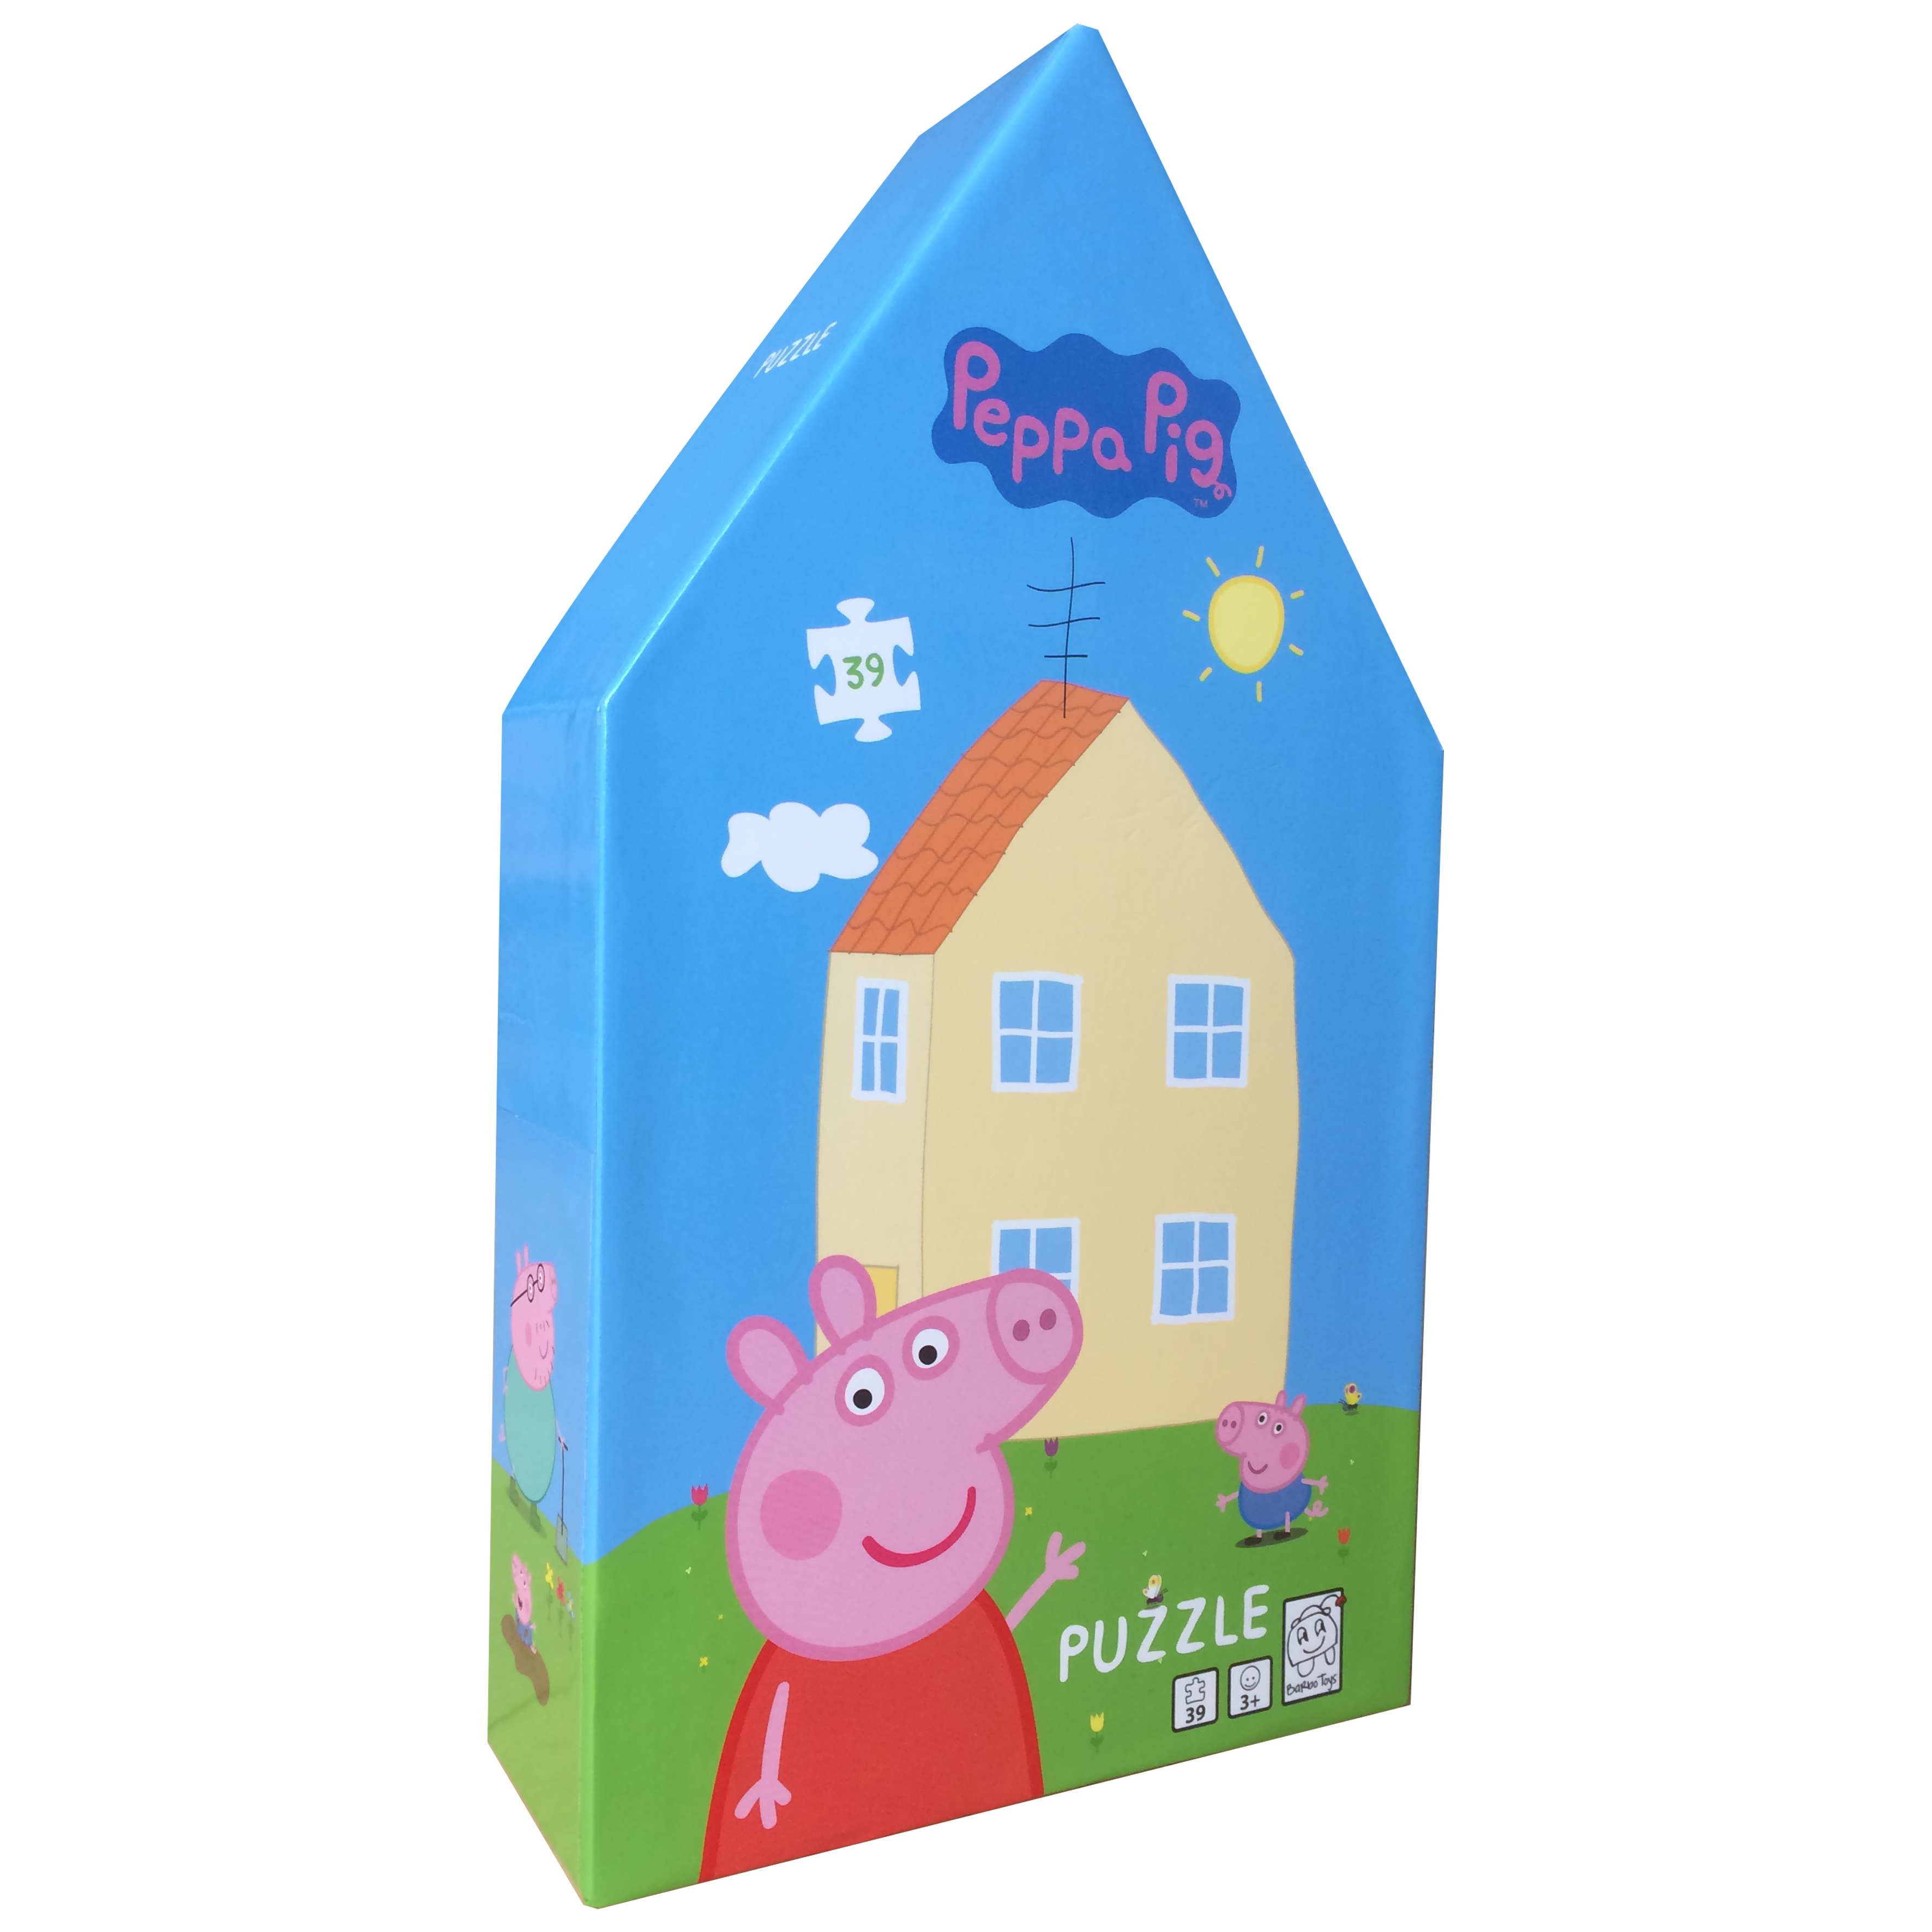 Peppa pig house